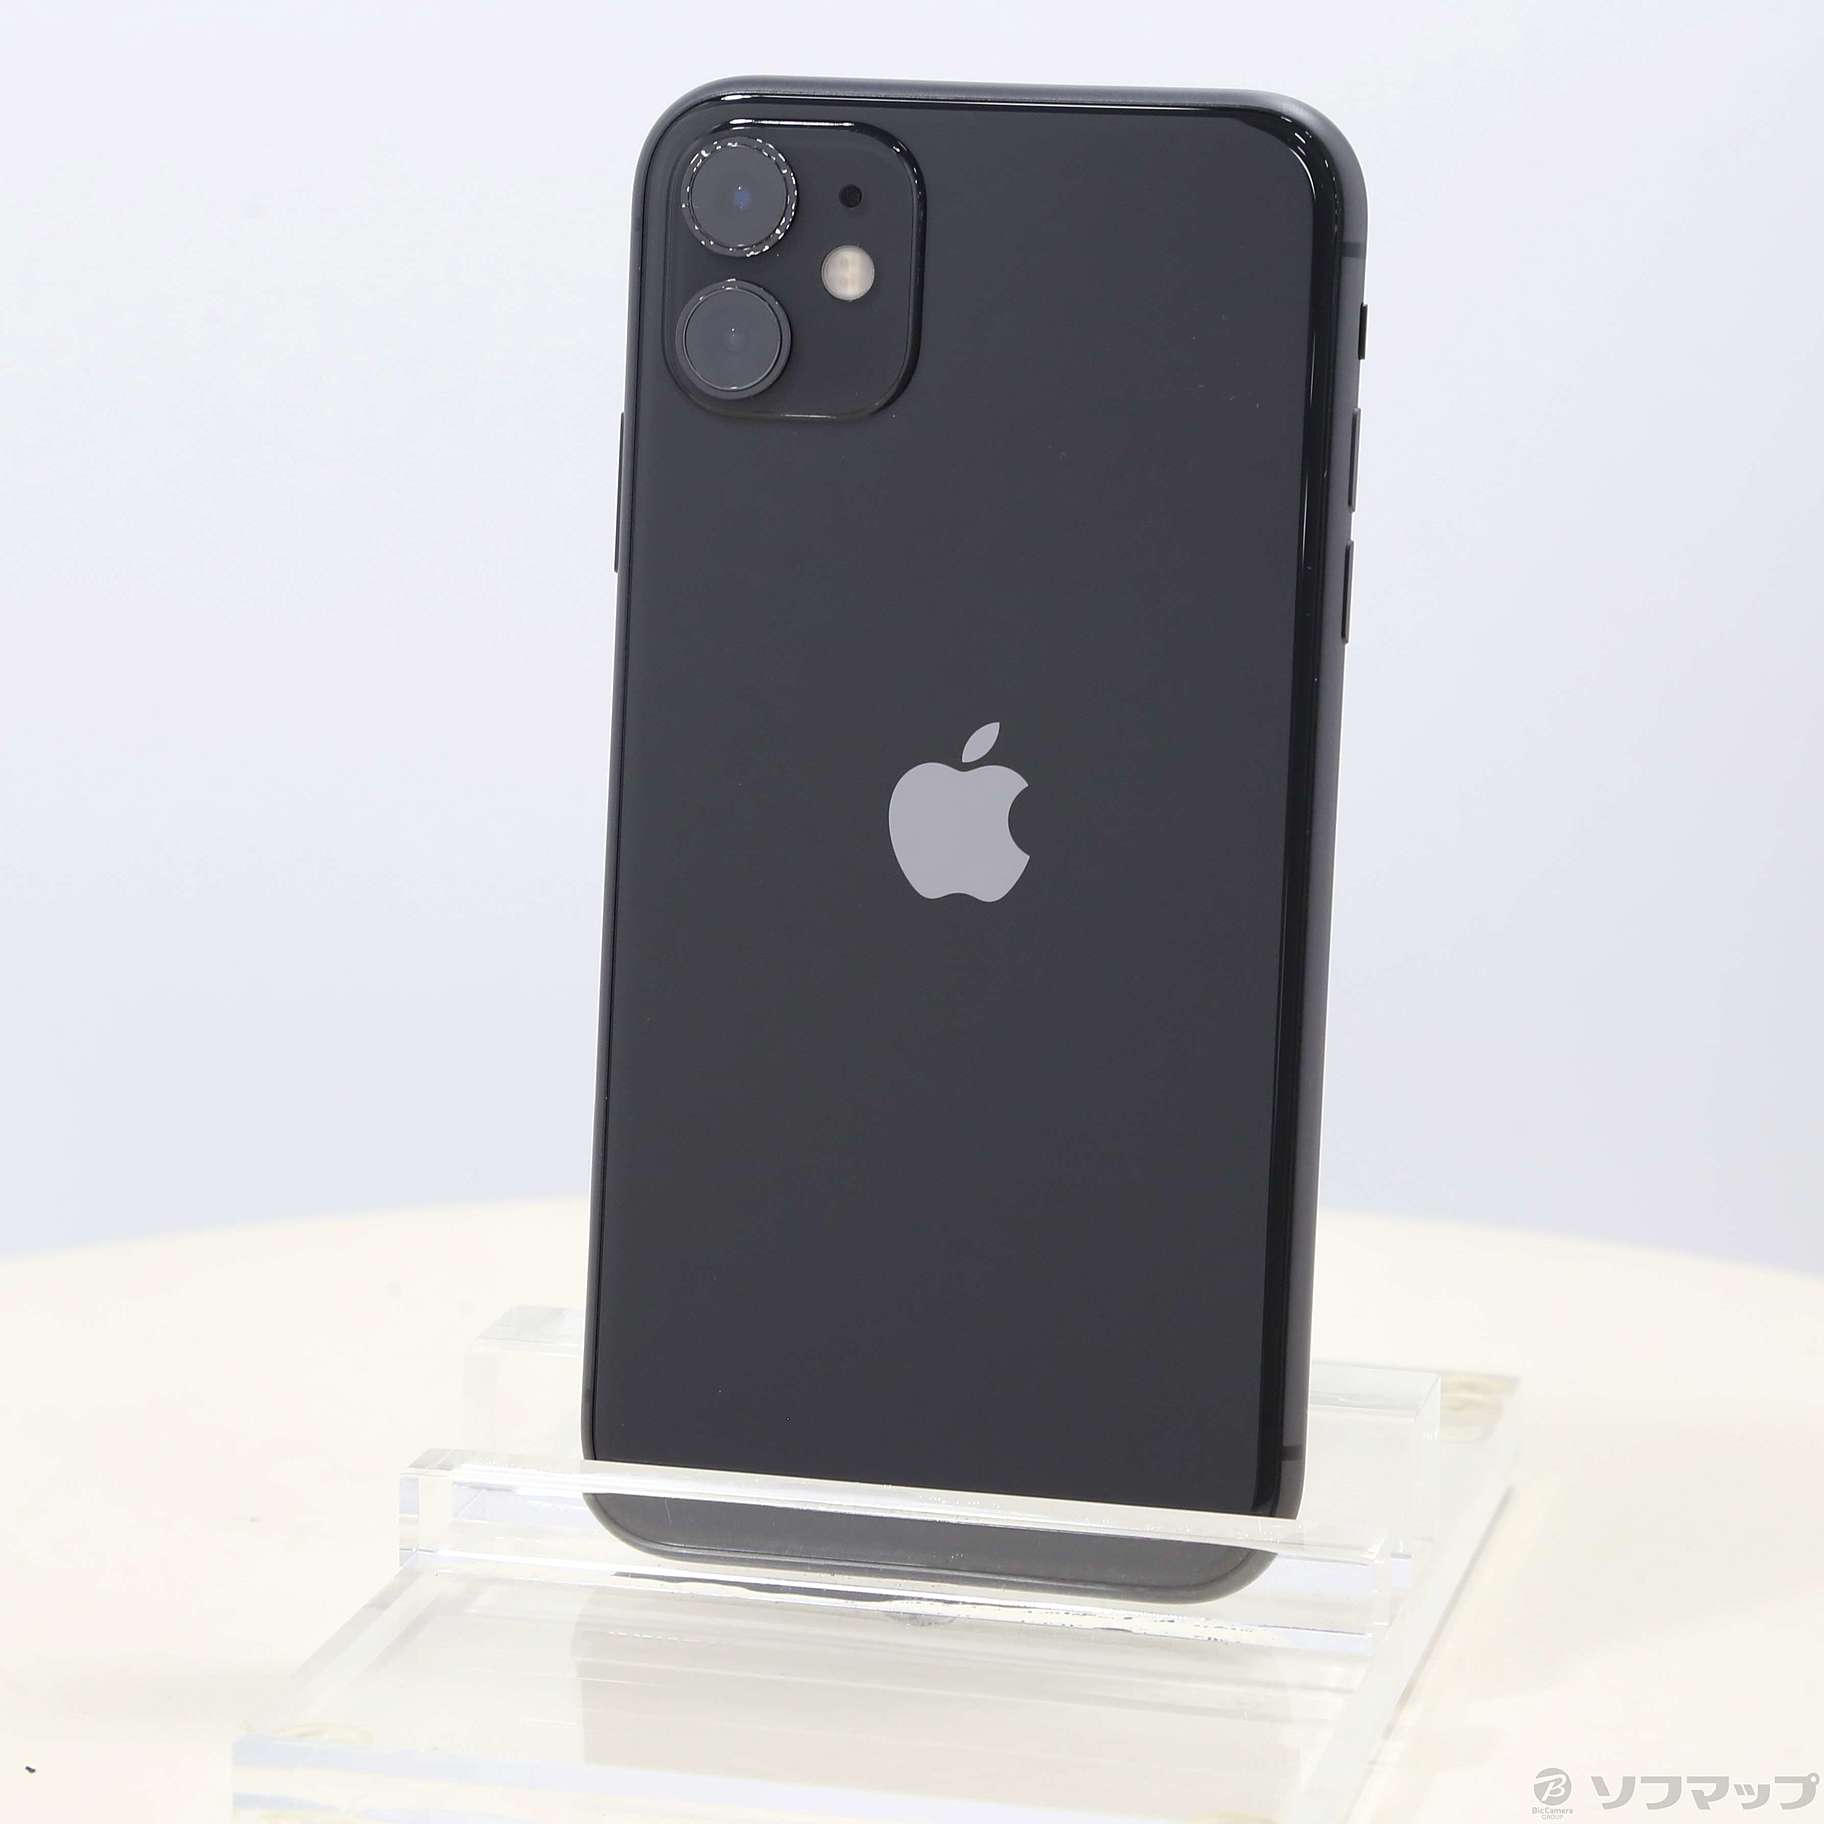 iPhone11 Black 64GB SIMフリー 新品未使用品